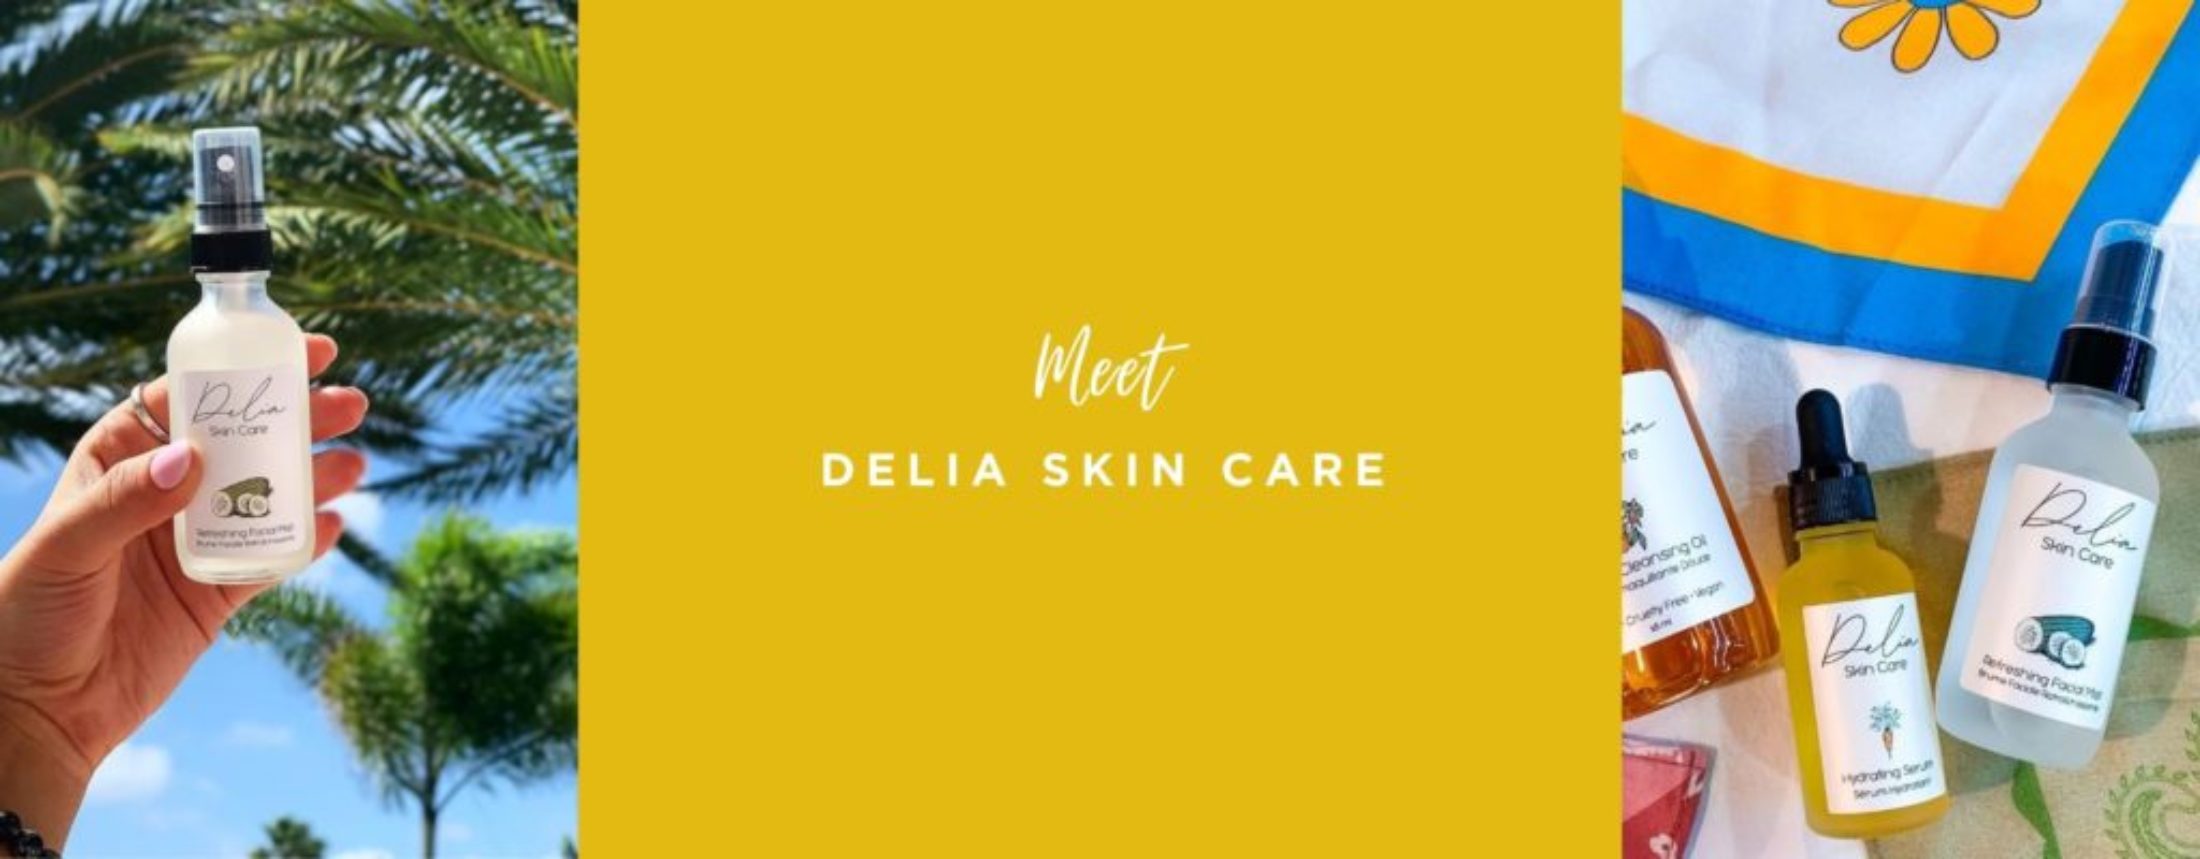 Meet Delia Skin Care banner